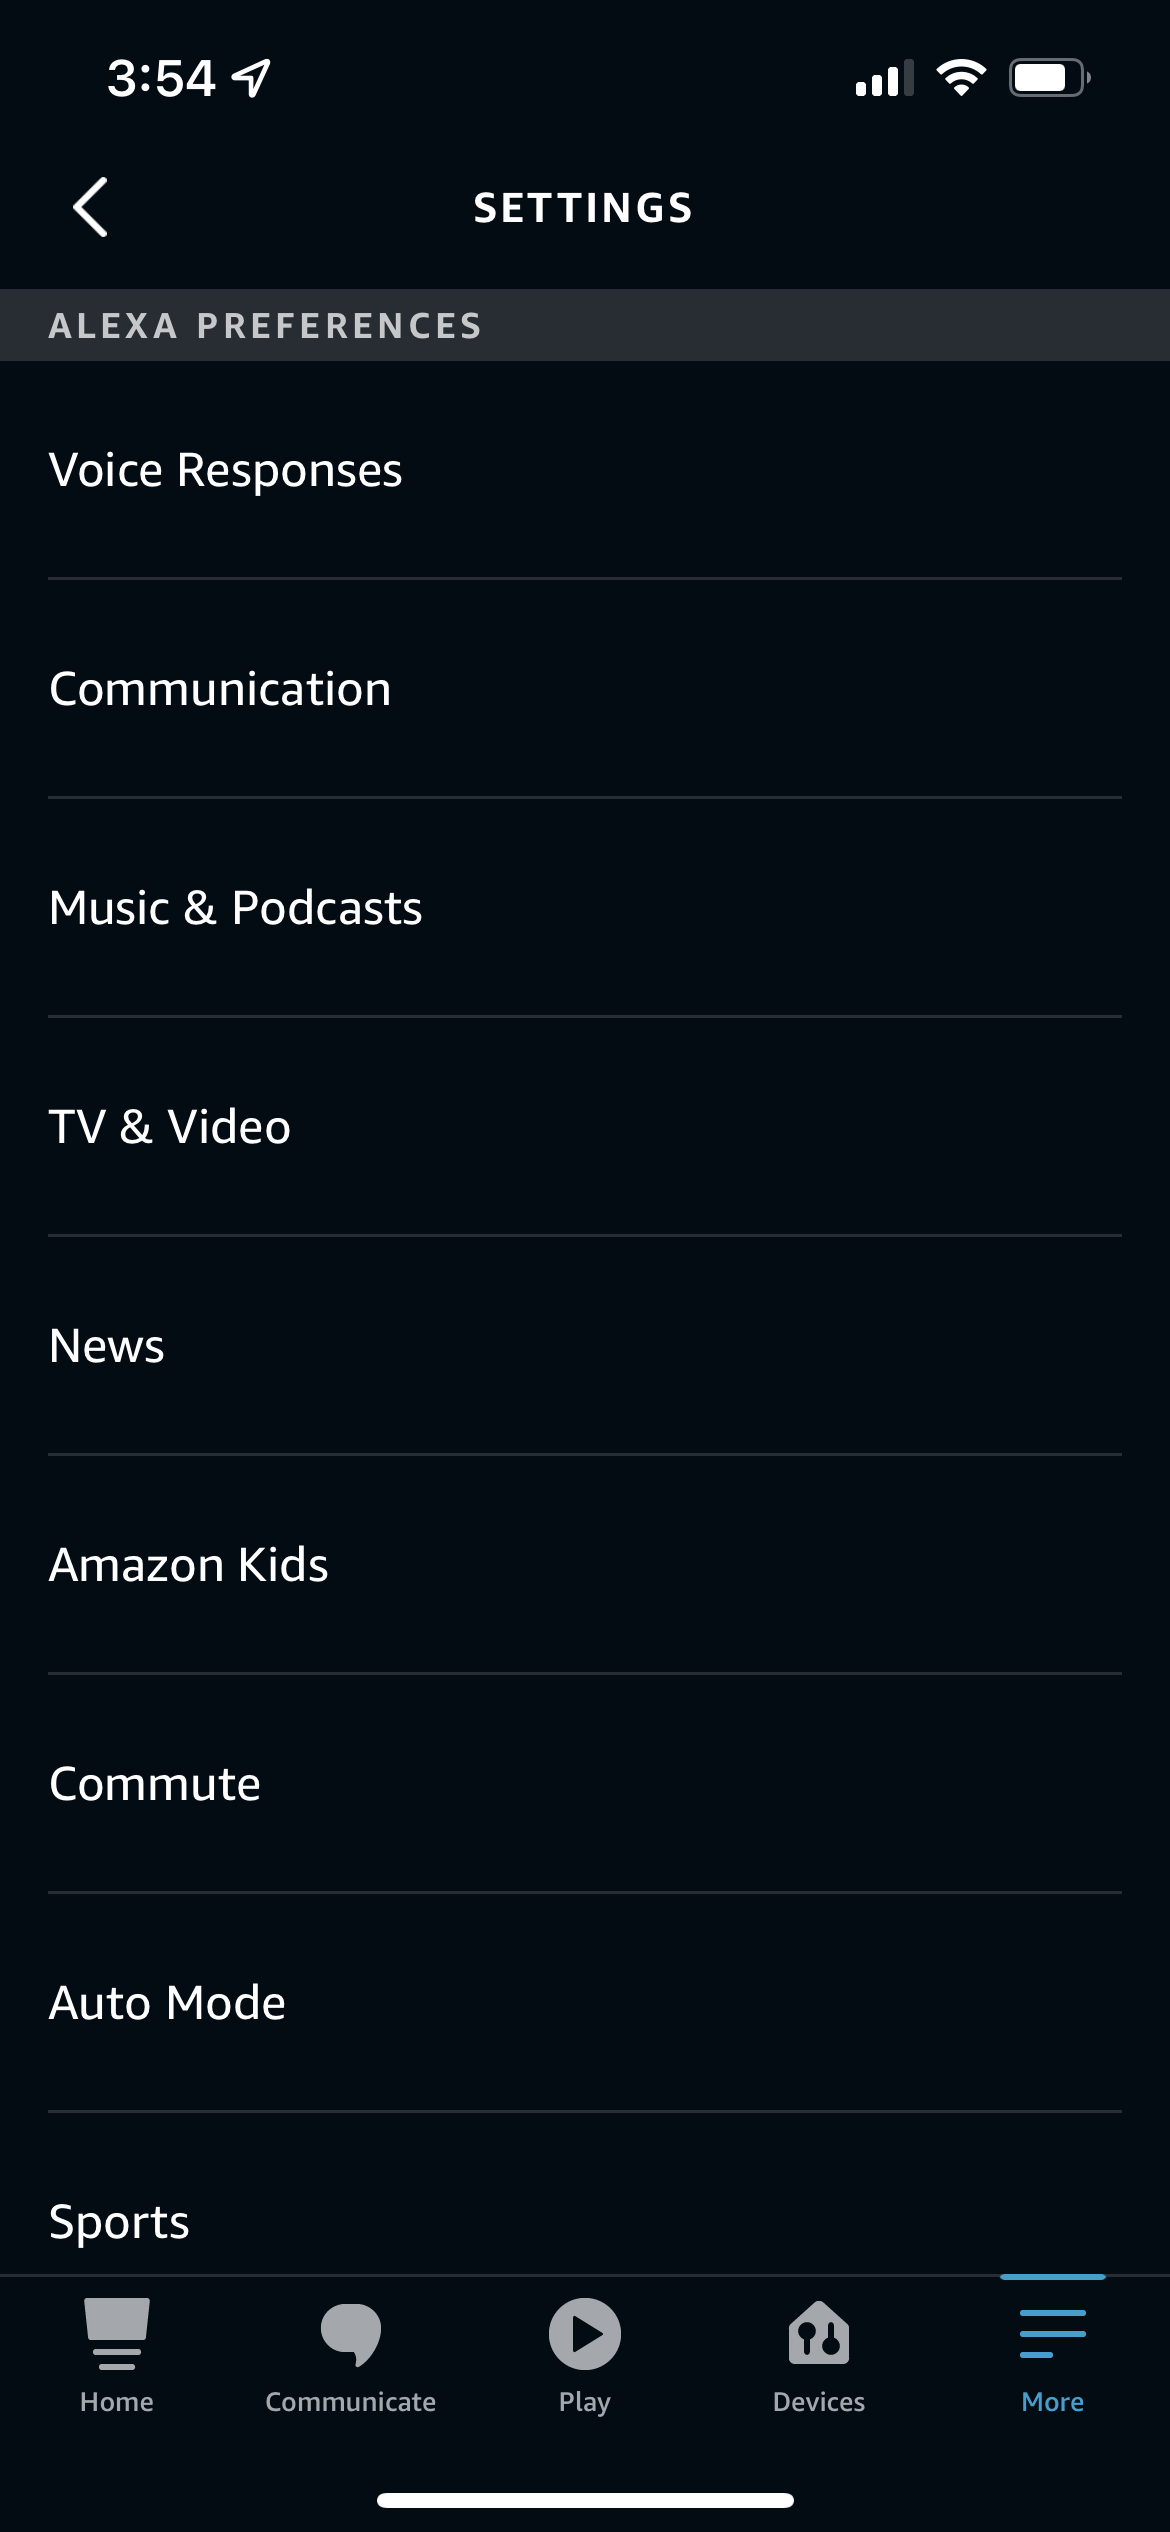 Alexa preferences in the Alexa app